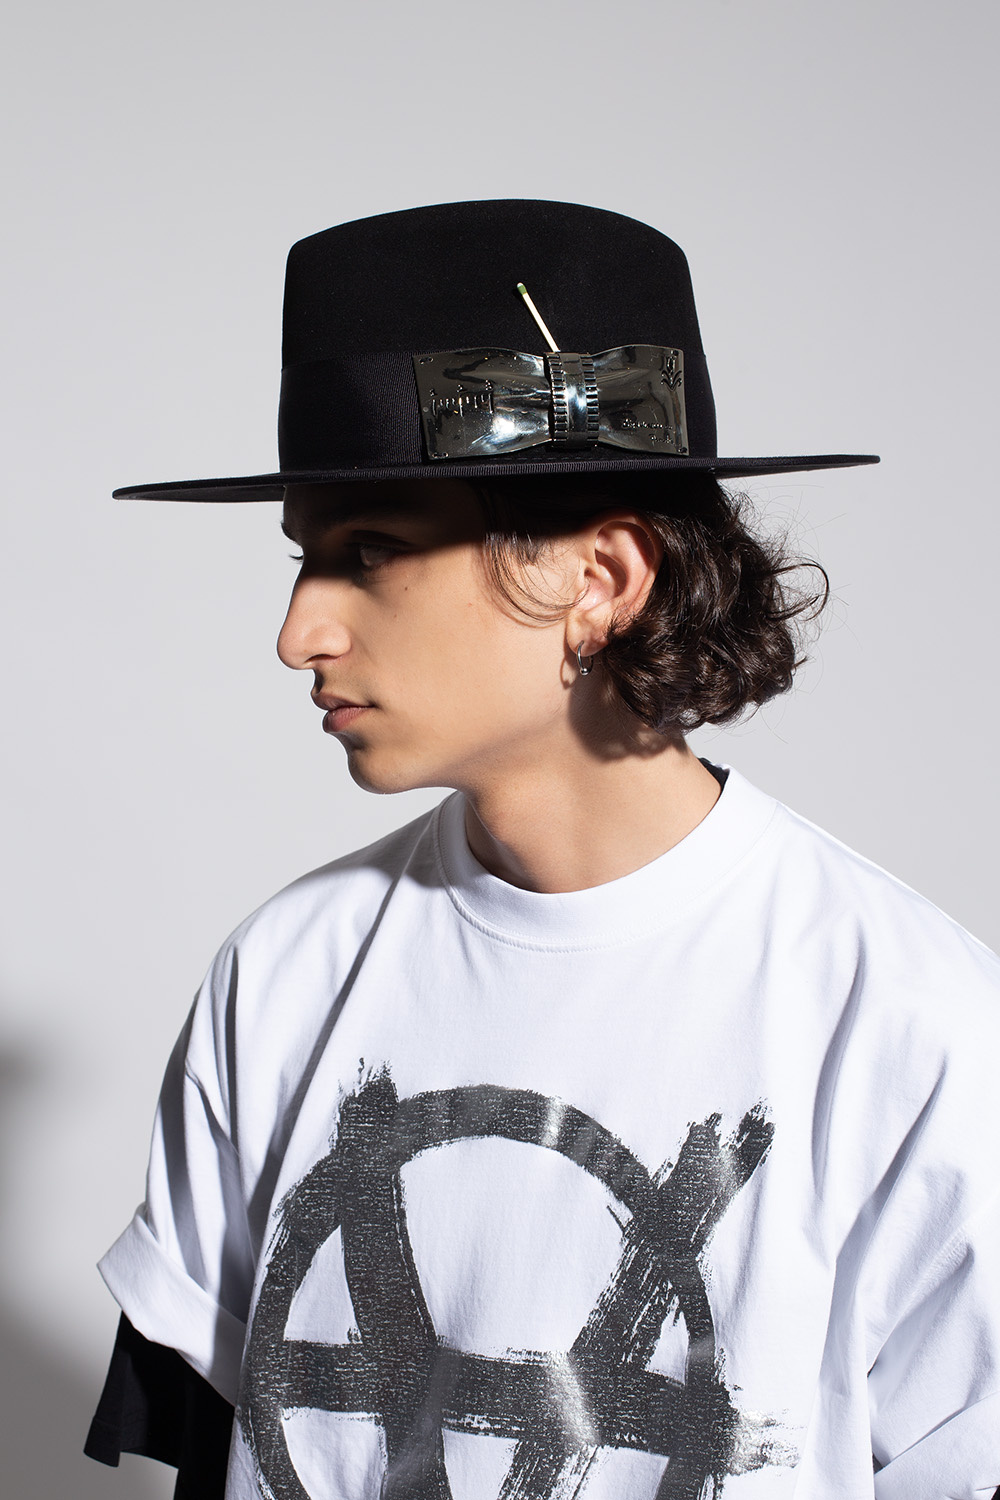 Nick Fouquet ‘Chrome Luna’ hat with bow